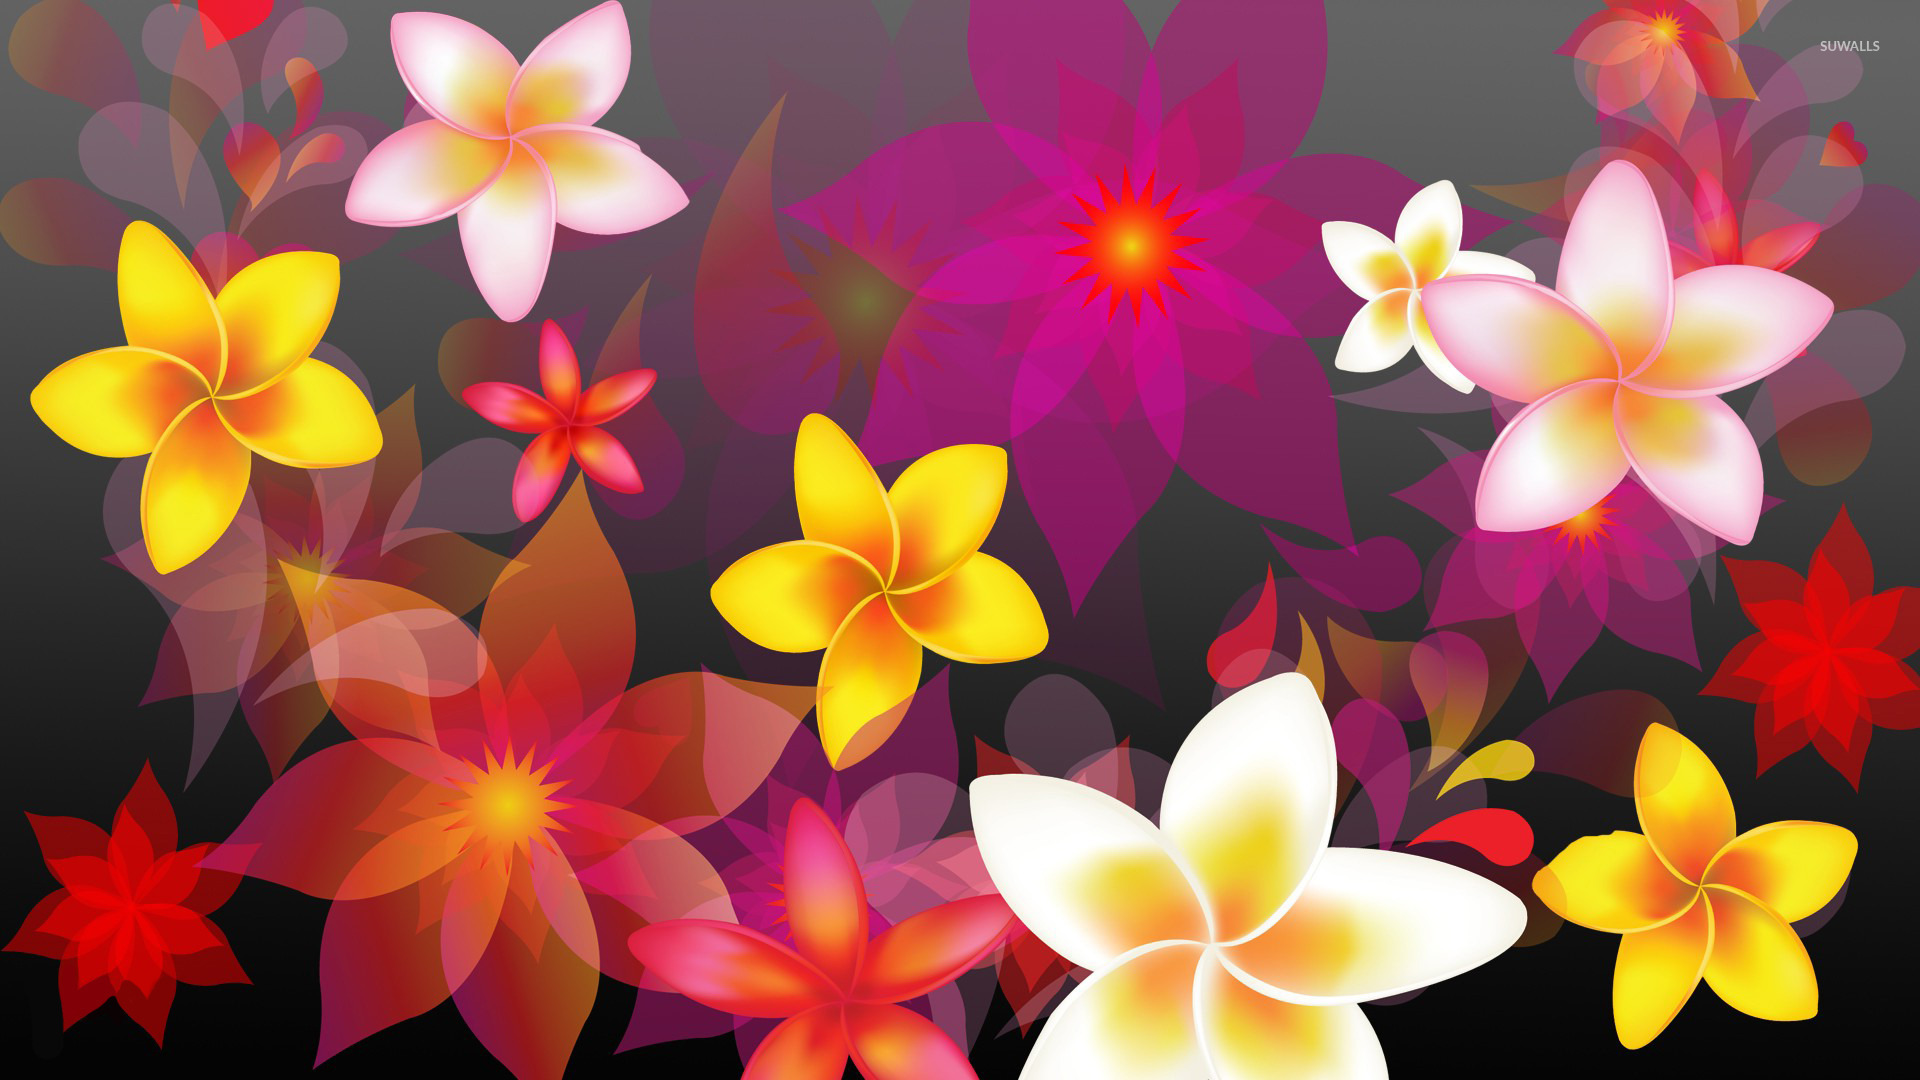 Colorful flowers [2] wallpaper   Digital Art wallpapers